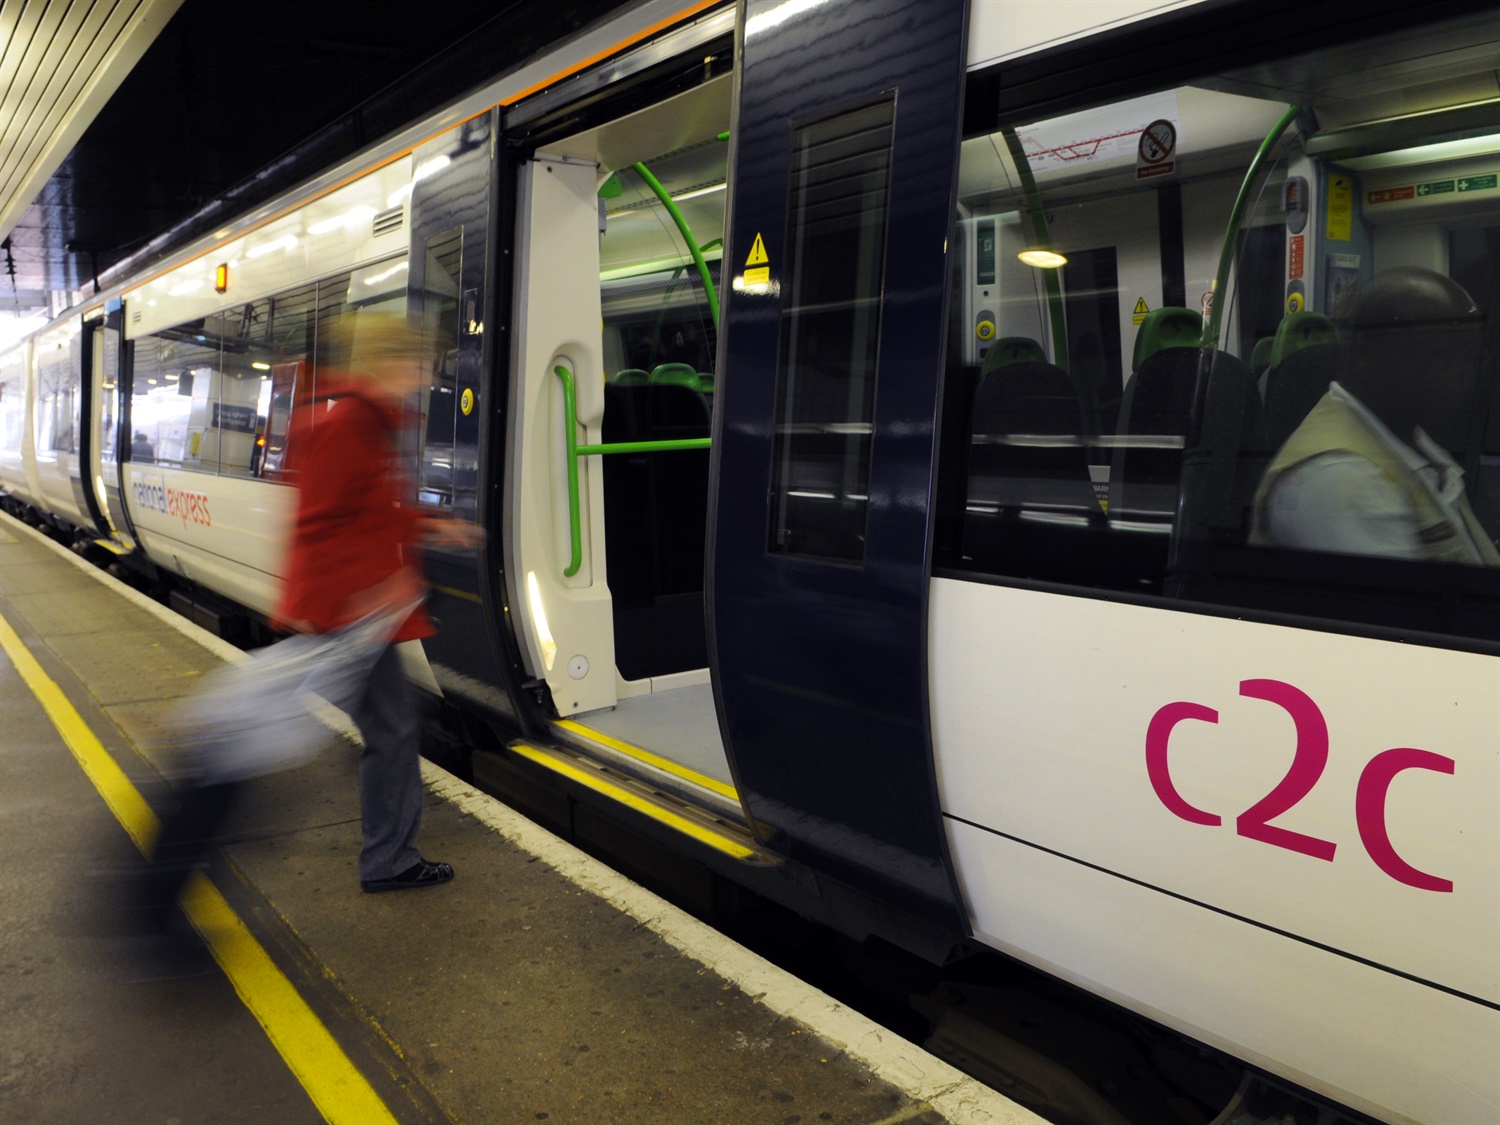 National Express to sell c2c franchise to Trenitalia, quitting UK rail